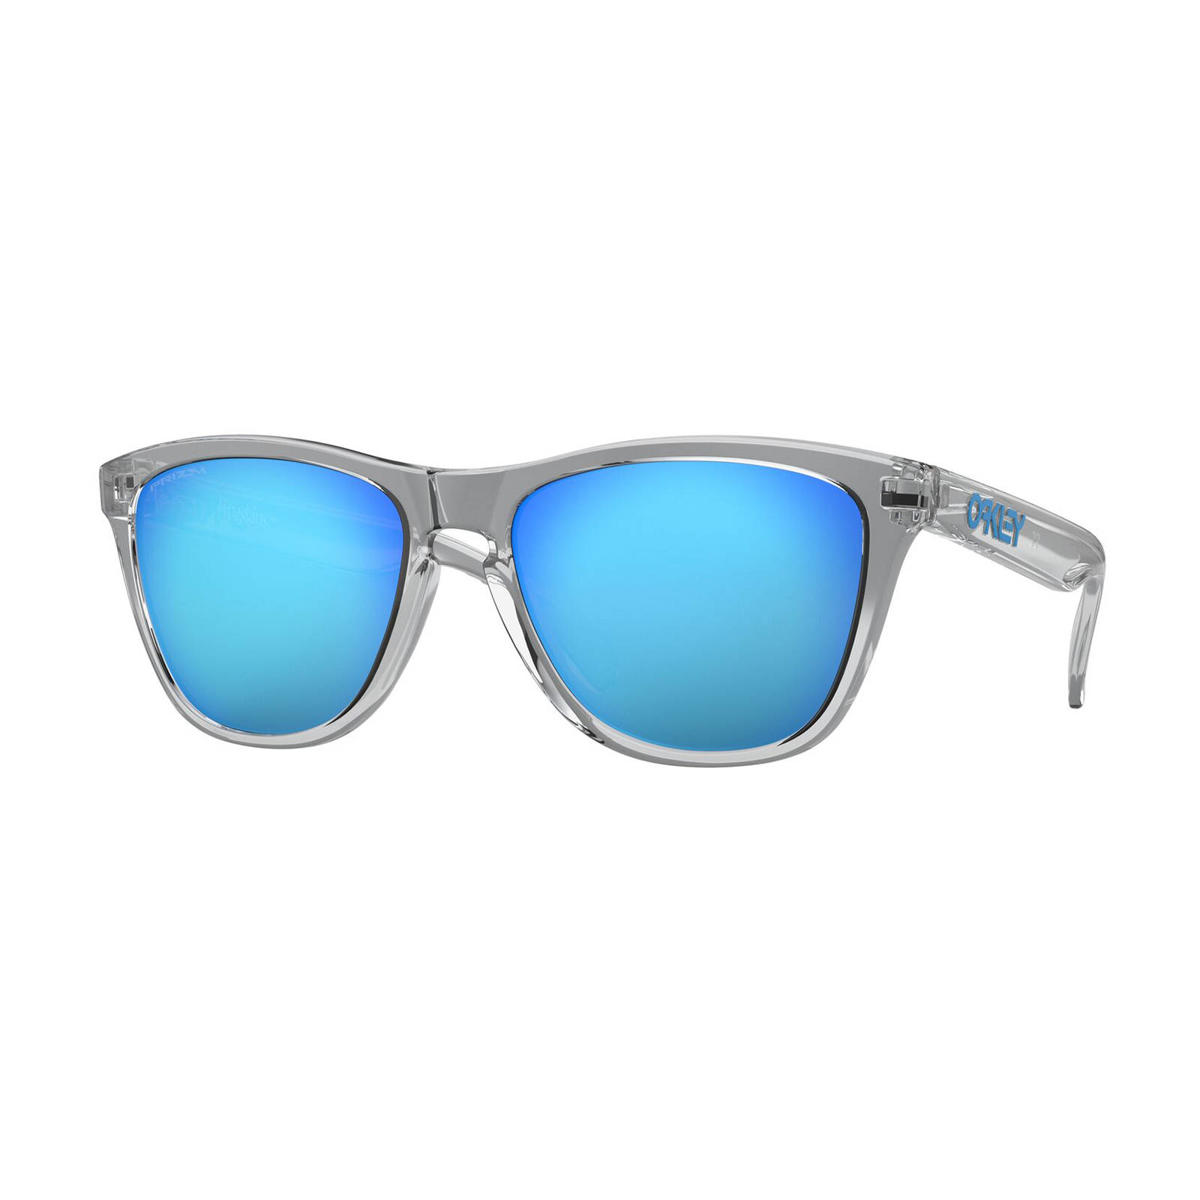 Moderniseren huiselijk gips Oakley zonnebril Frogskins transparant/blauw | wehkamp